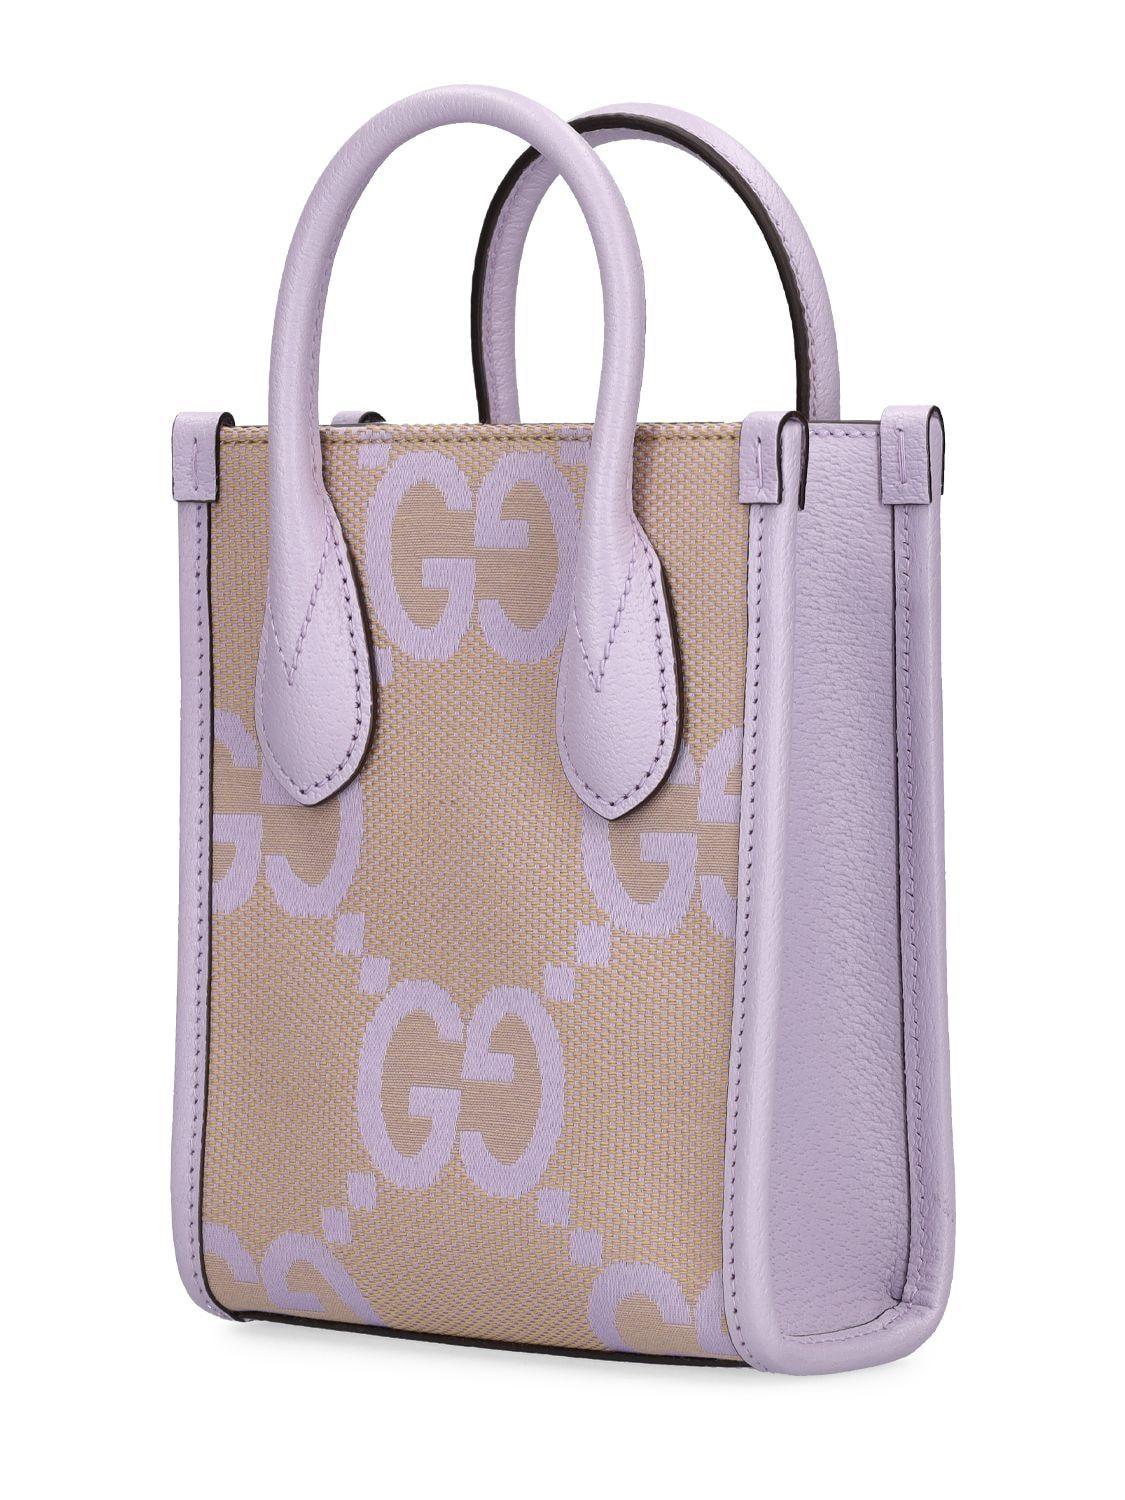 Gucci Jumbo GG Mini Tote Bag Beige/Lilac in Canvas - US